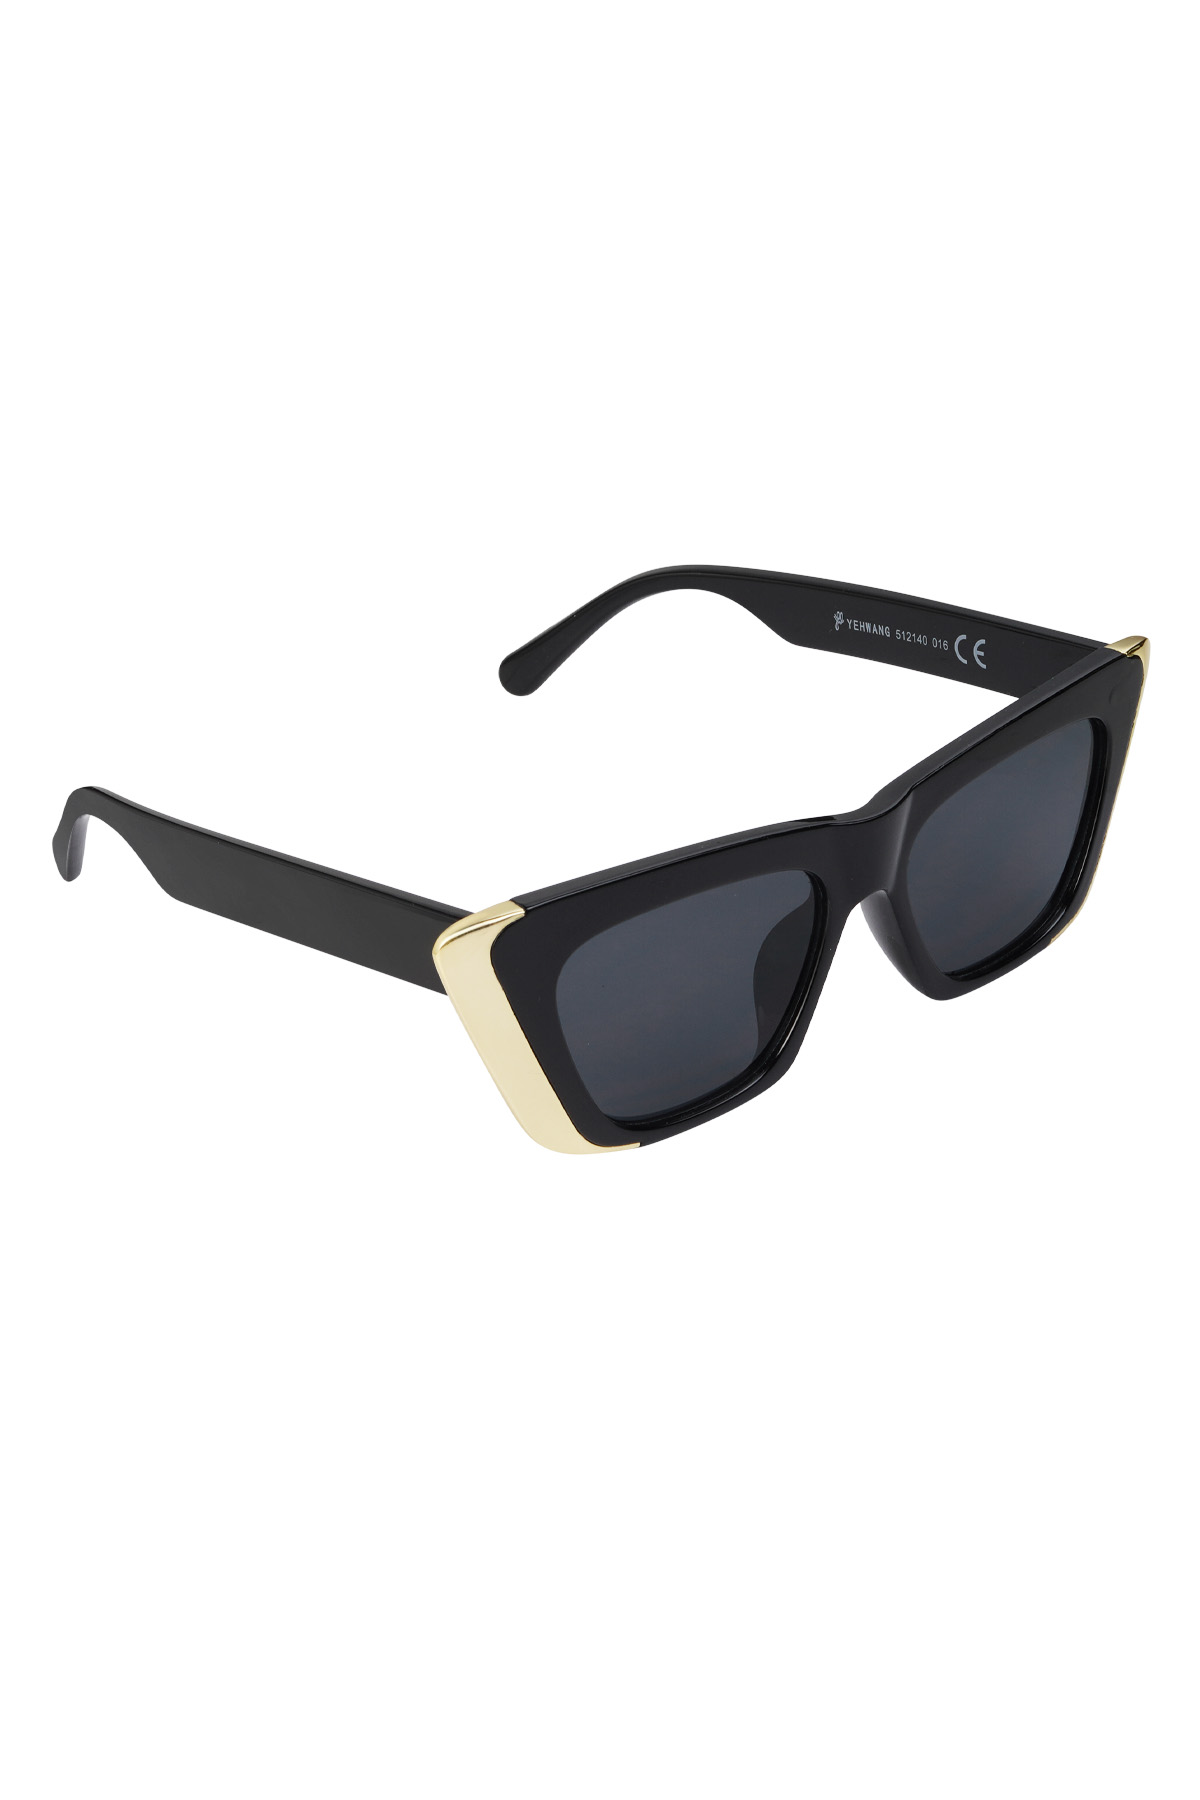 Sunglasses sun savvy - black gold